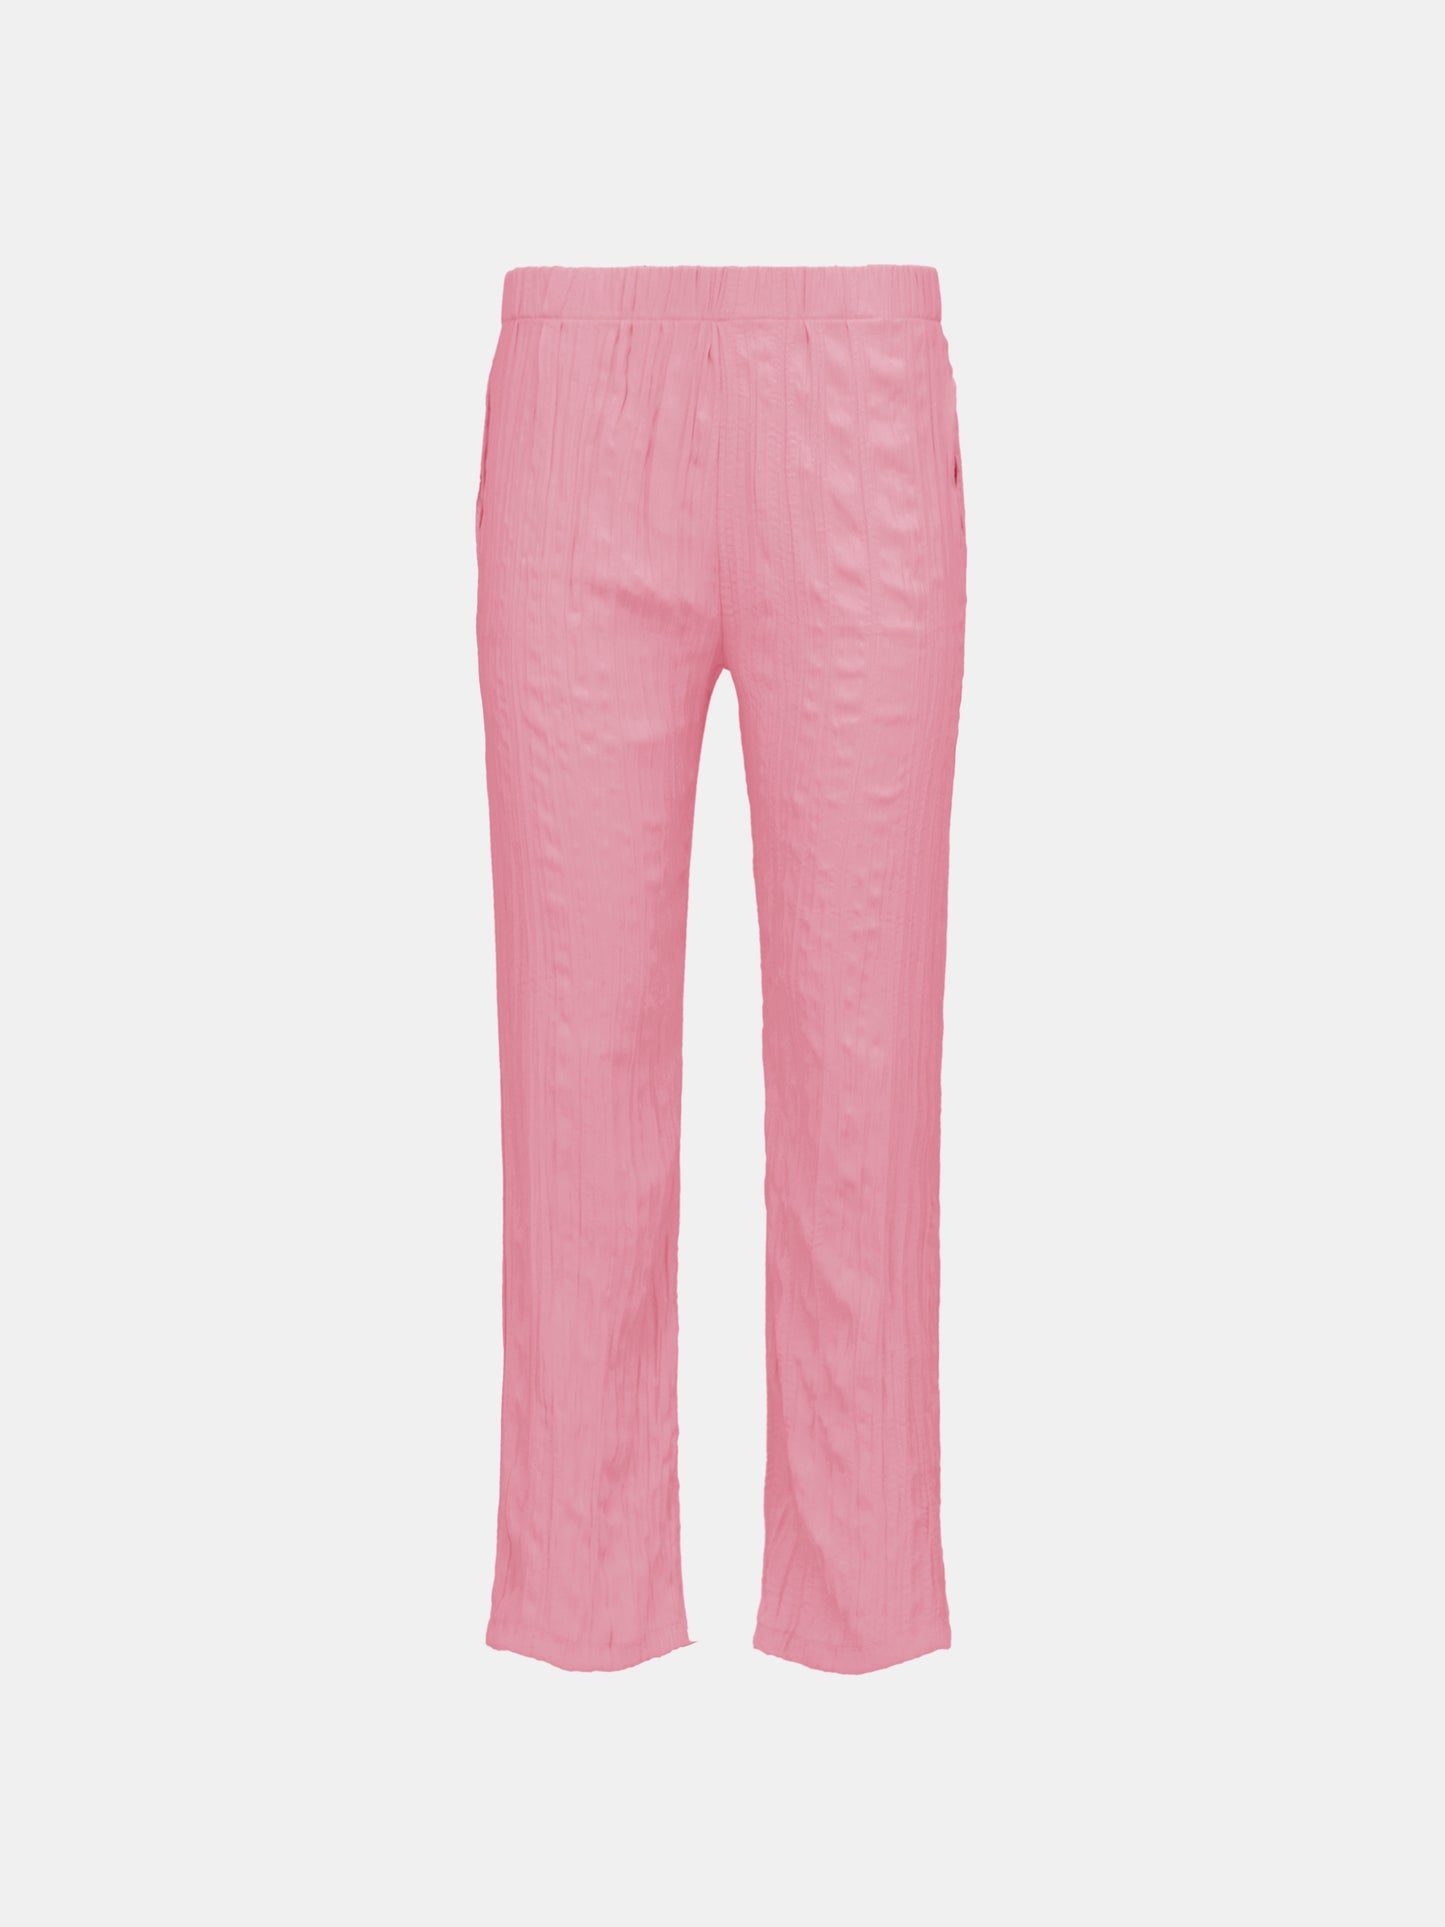 Crinkled Garment-Pleated Pants, Rose